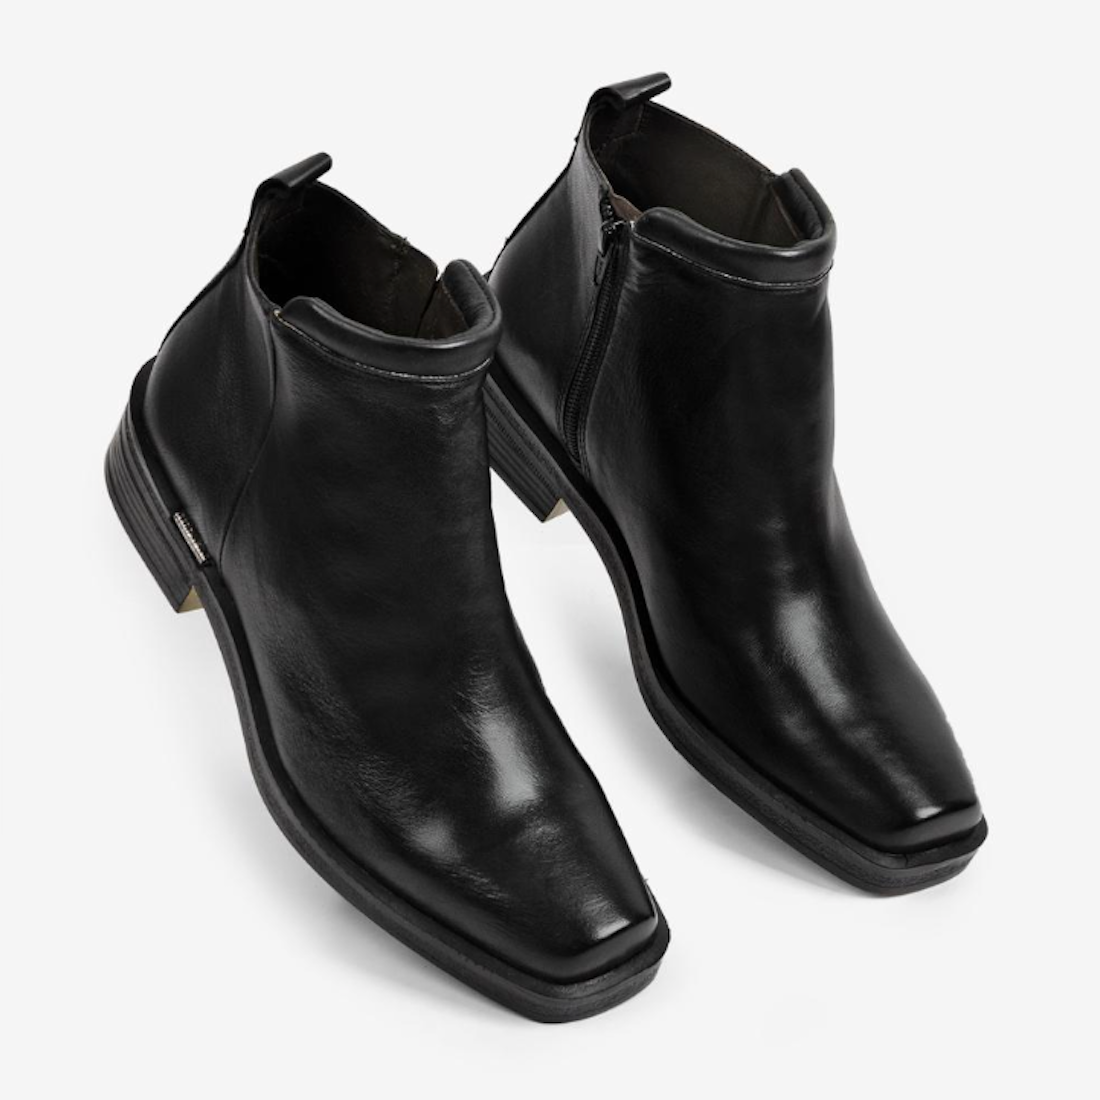 Ferracini urban Way Men's 6694 Leather Boots